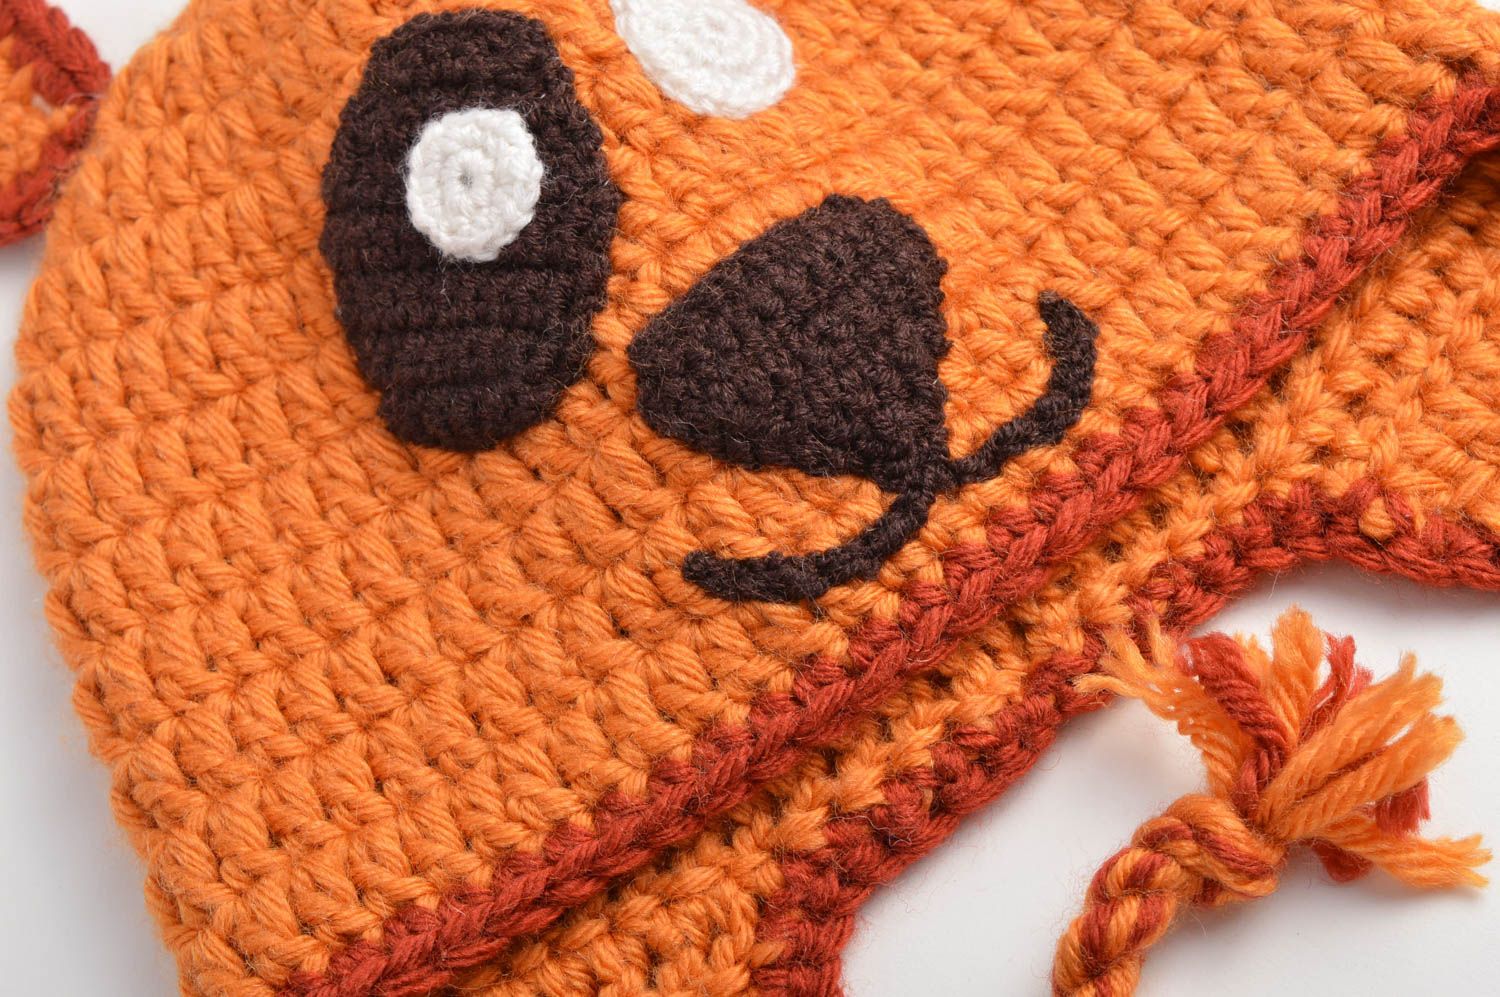 Crochet baby hat handmade accessories toddler hat presents for kids warm hat photo 5